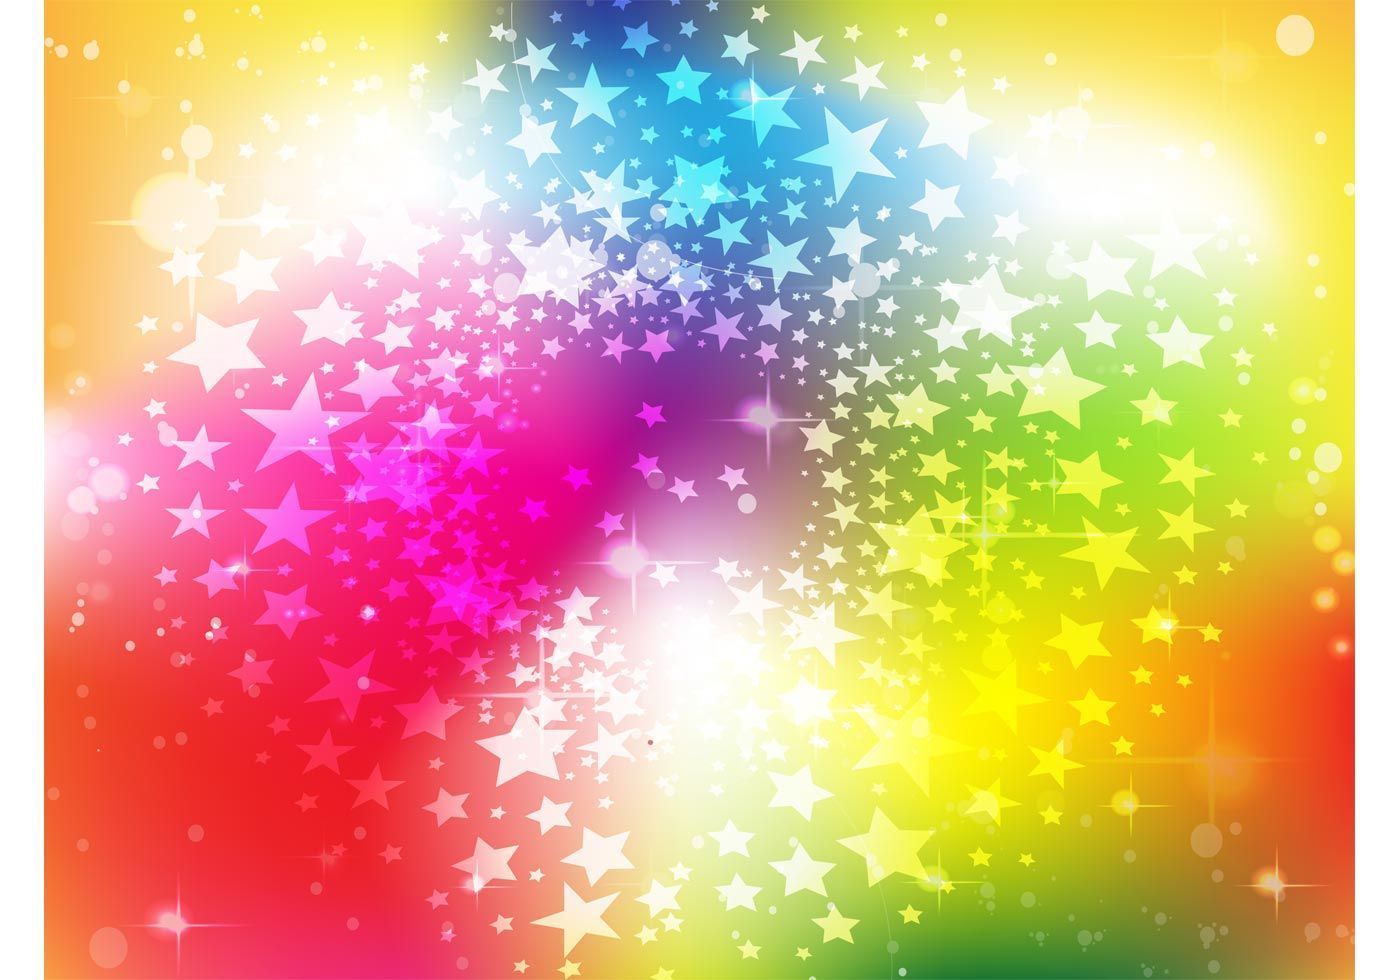 Stars Background Free Vector Art - (9984 Free Downloads)